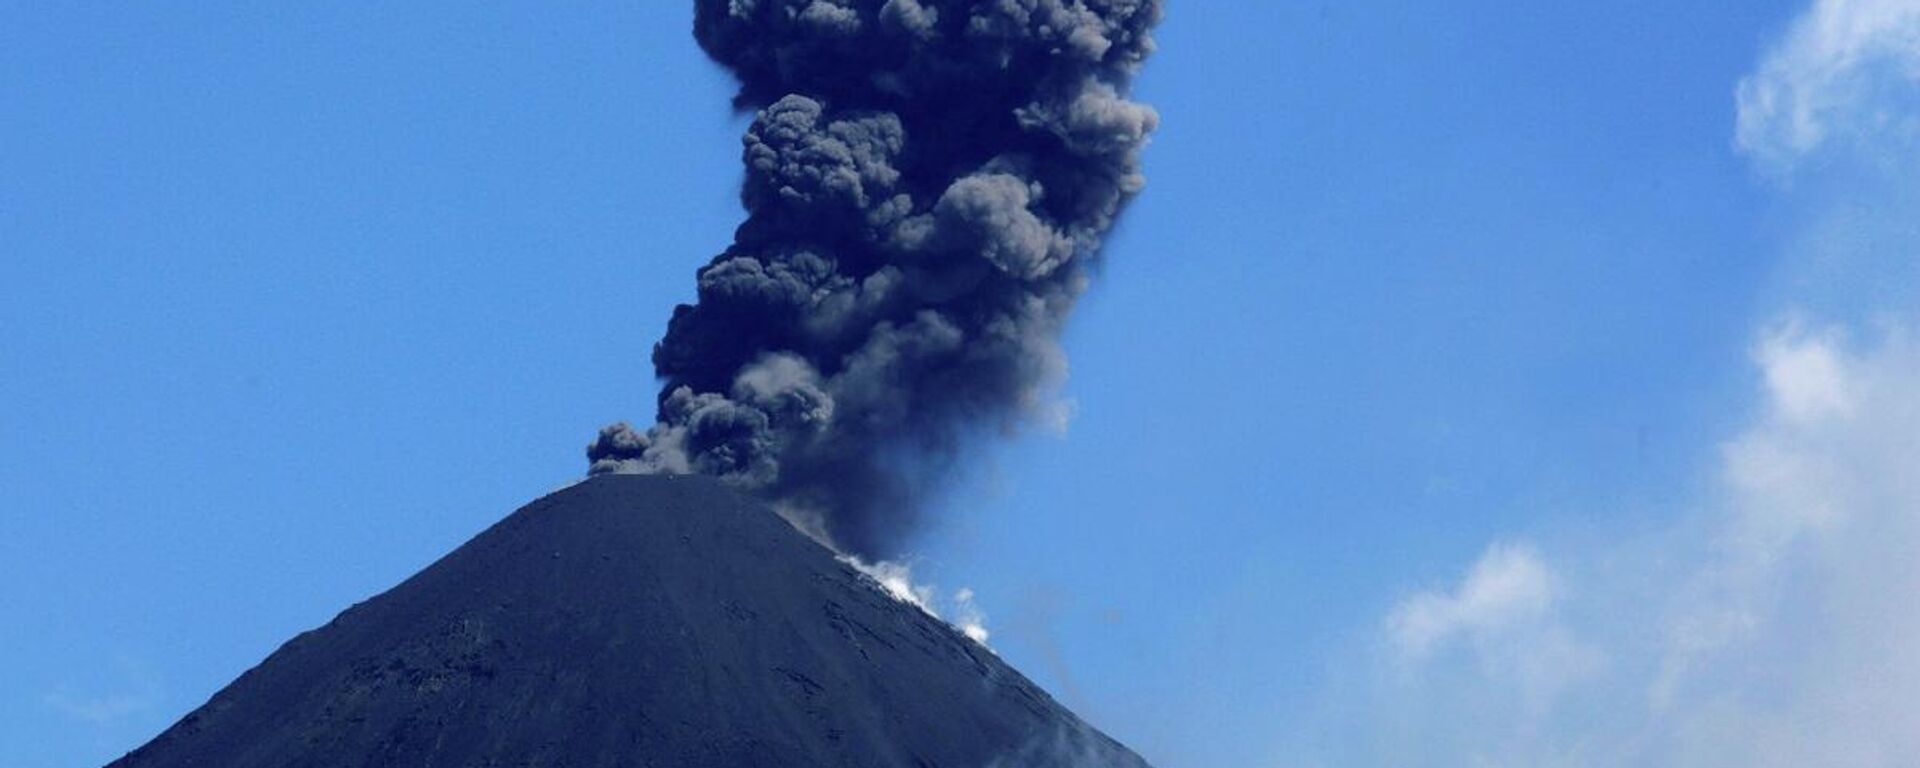 El volcán Pacaya de Guatemala - Sputnik Mundo, 1920, 05.03.2021